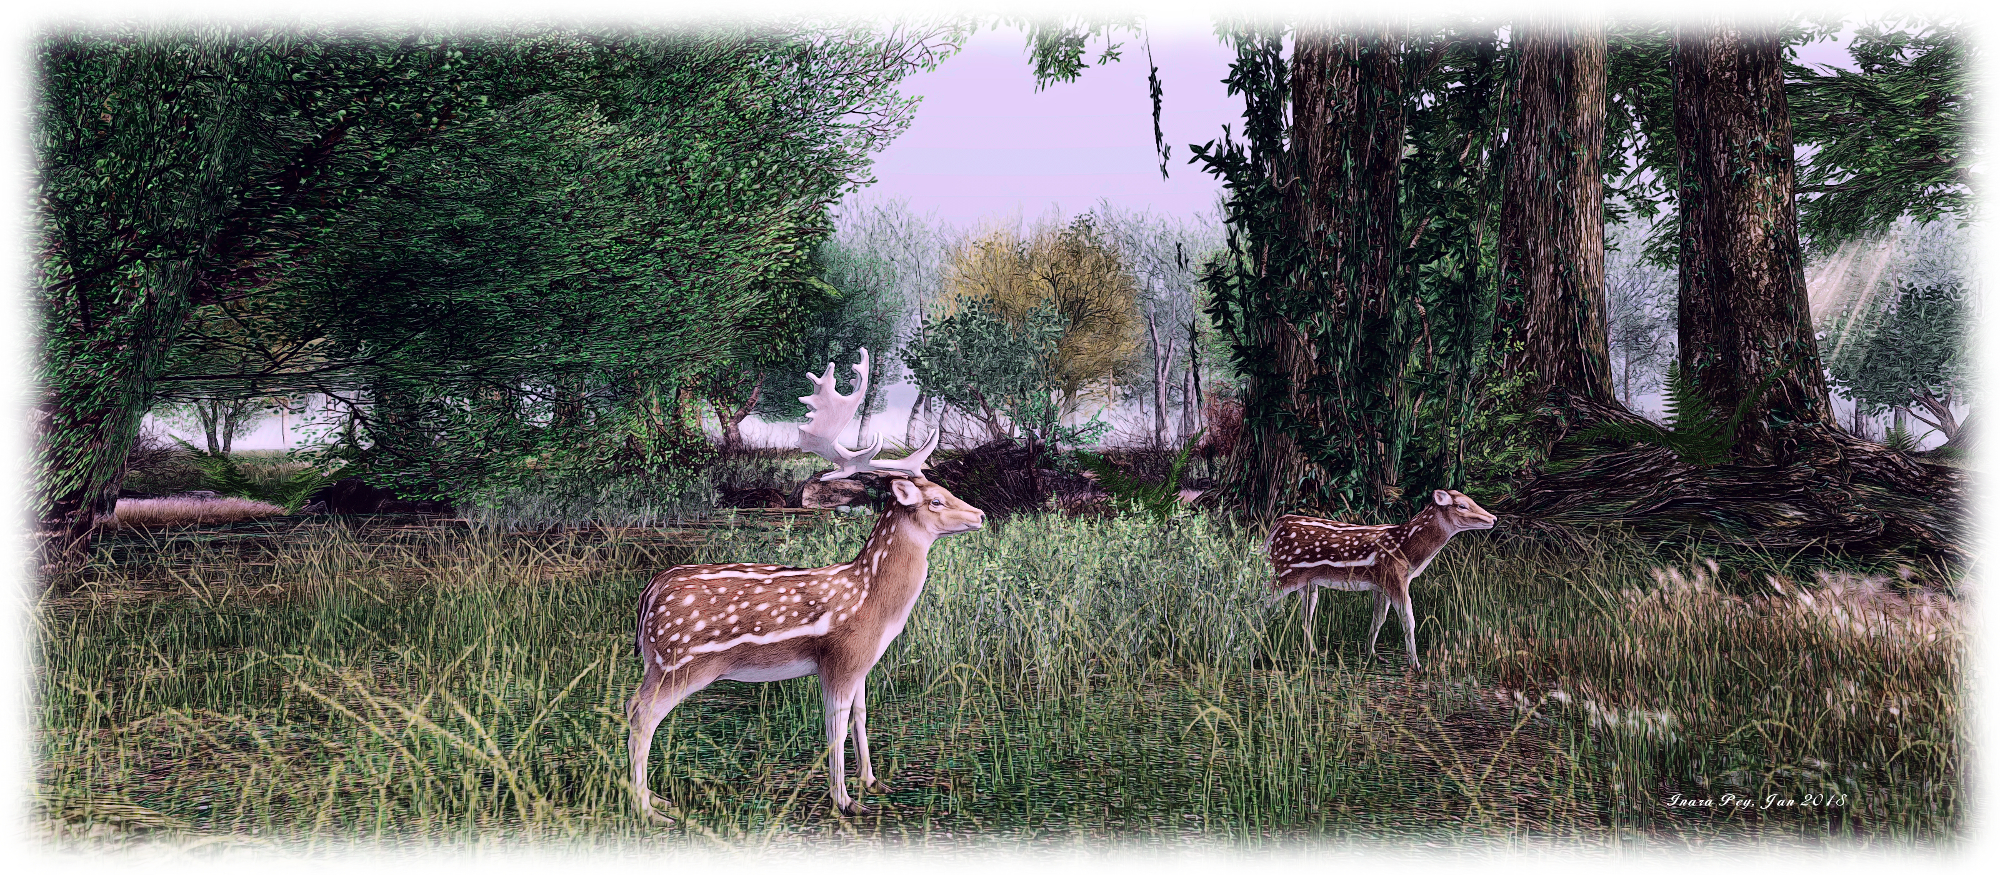 Oh Deer; Inara Pey, January 2018, on Flickr